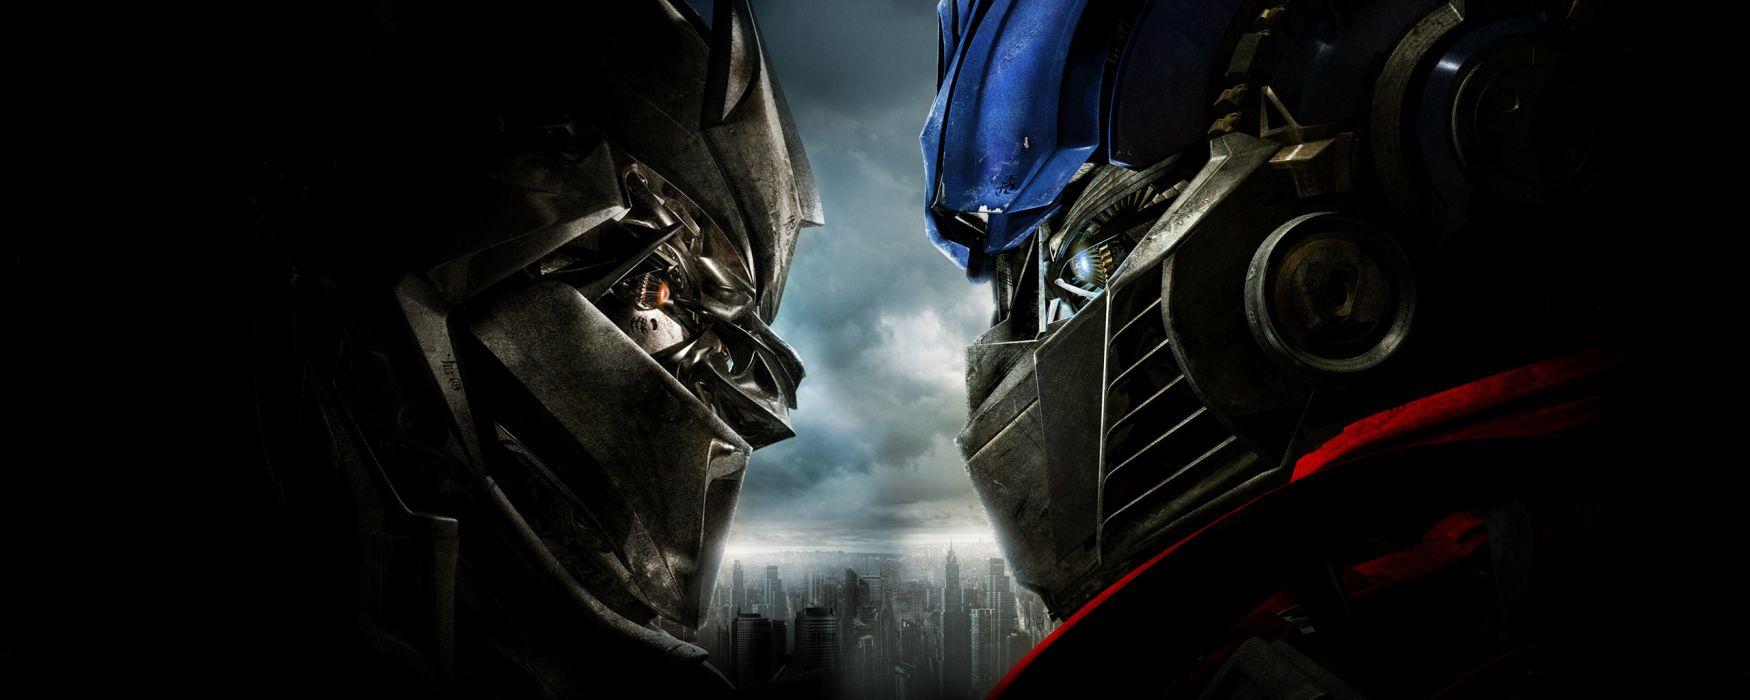 Optimus Prime Megatron Transformers 2 of the Fallen